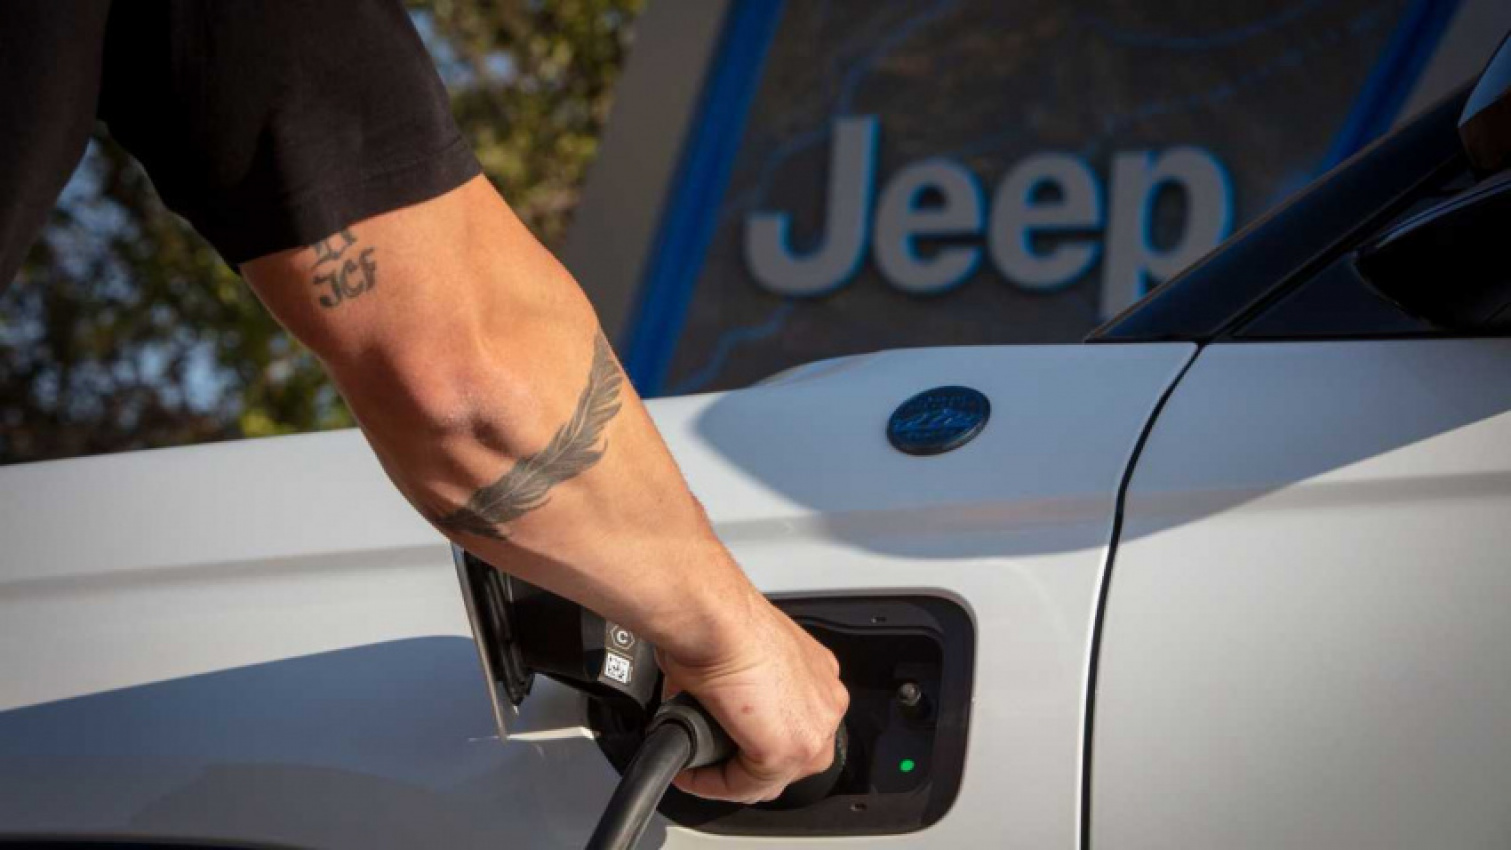 autos, cars, jeep, reviews, jeep grand cherokee, 2022 jeep grand cherokee 4xe first drive review: plug away